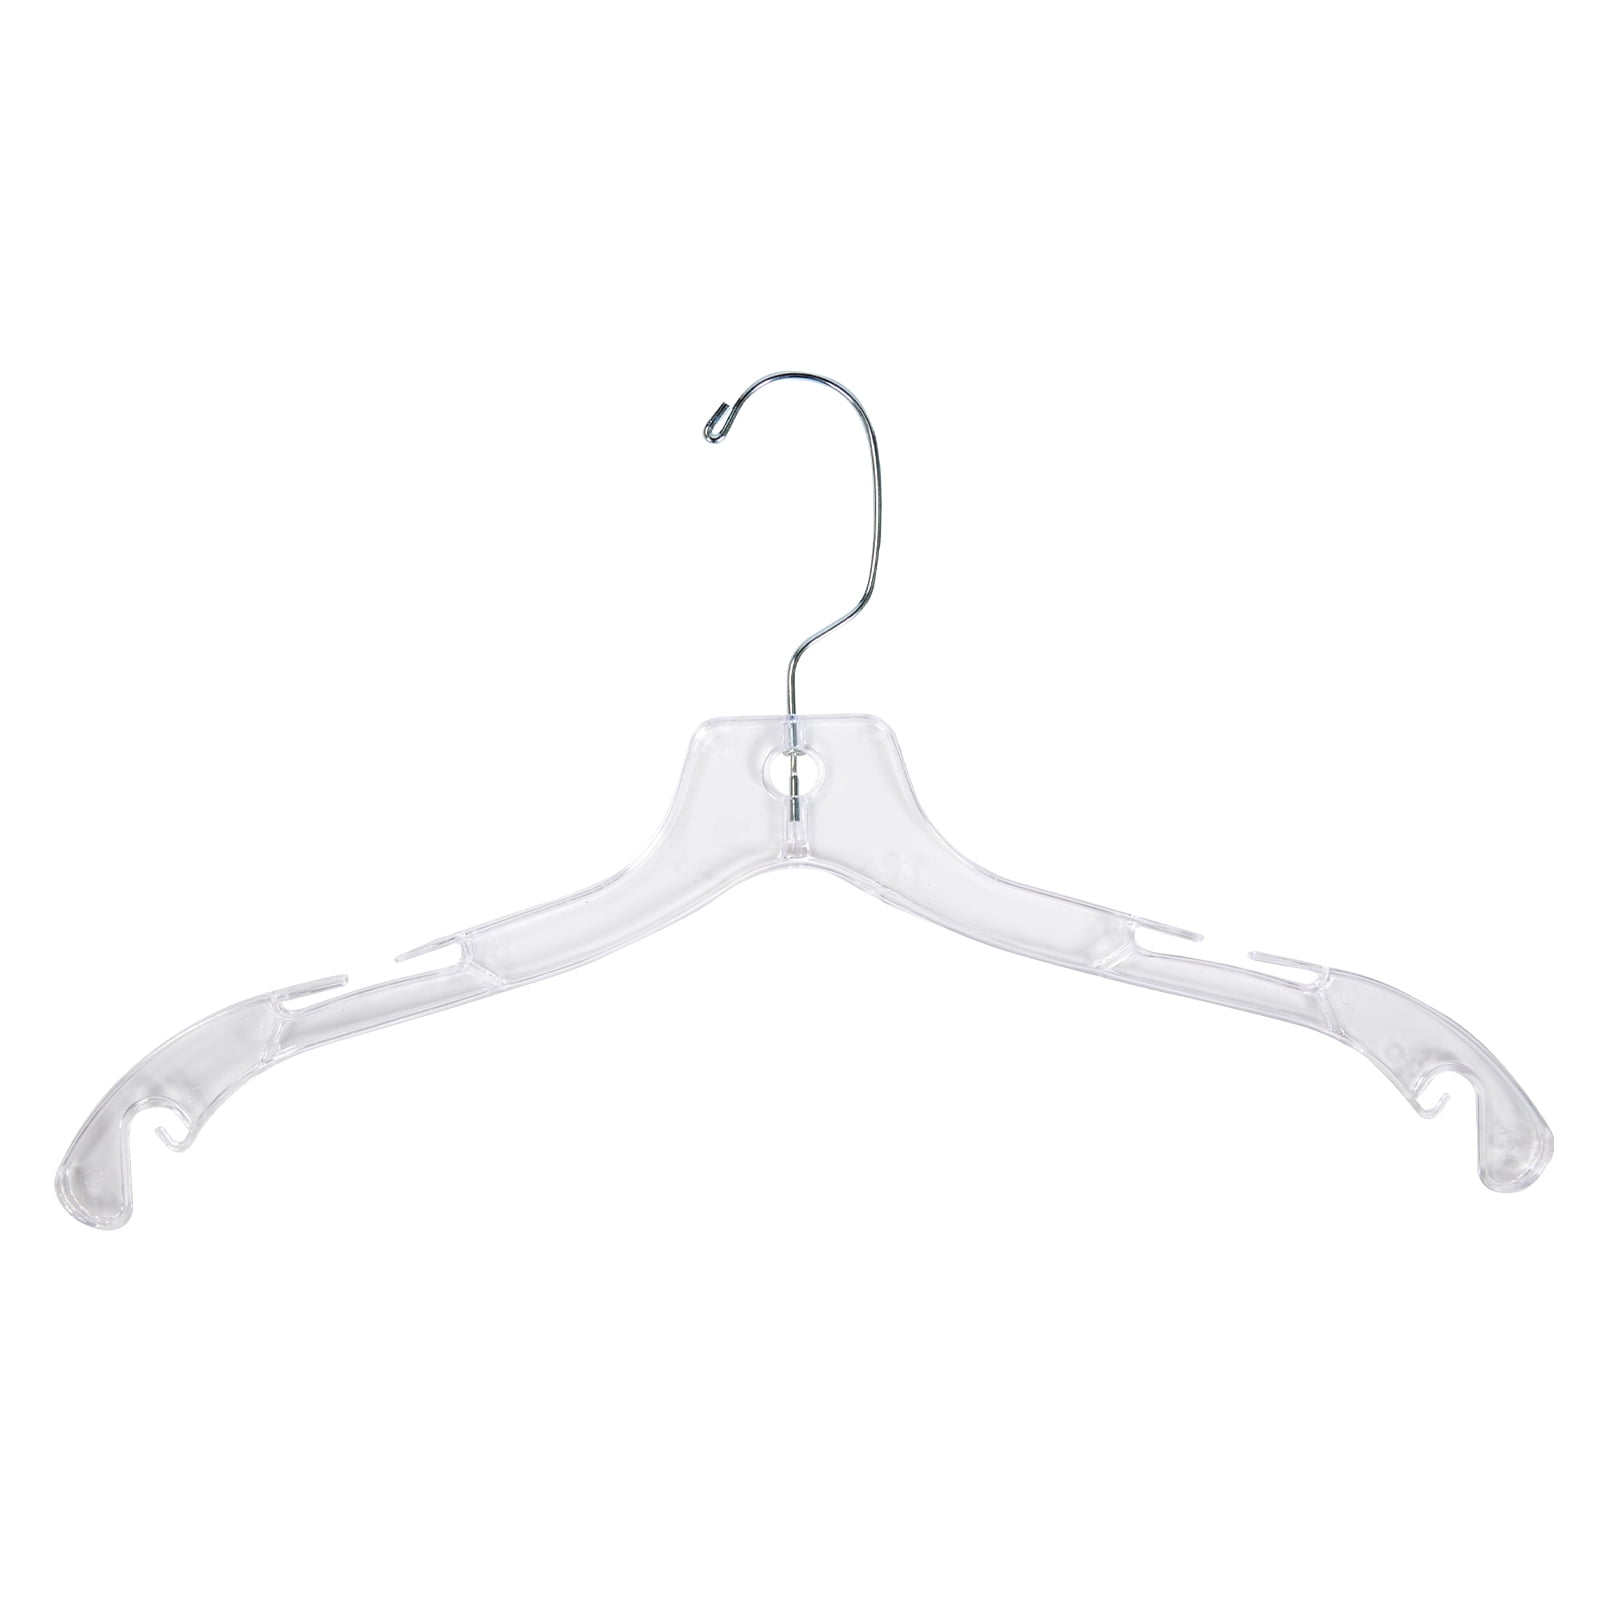 Locking Antitheft Hook 17 Plastic Heavy-Duty Suit Hanger For Sale